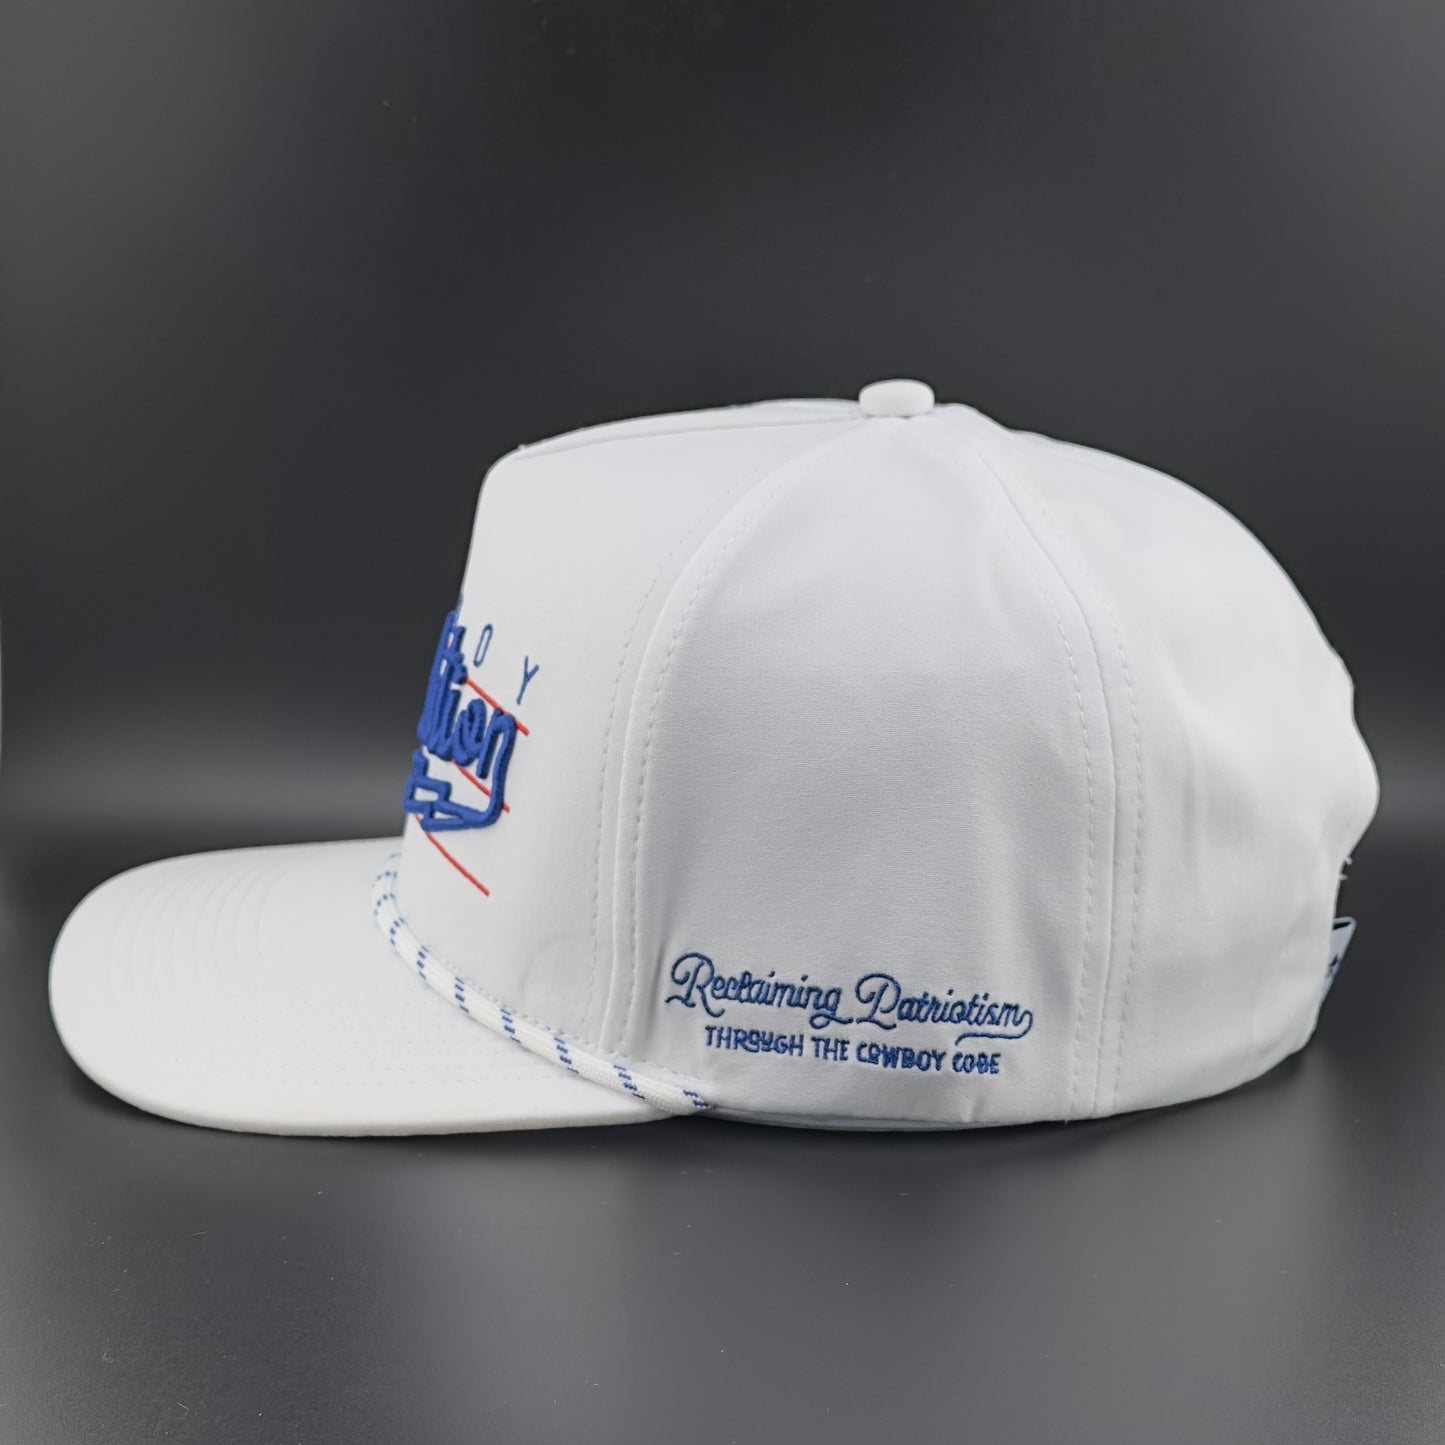 “Lightning" White - Cowboy Revolution 5-panel Performance Hat